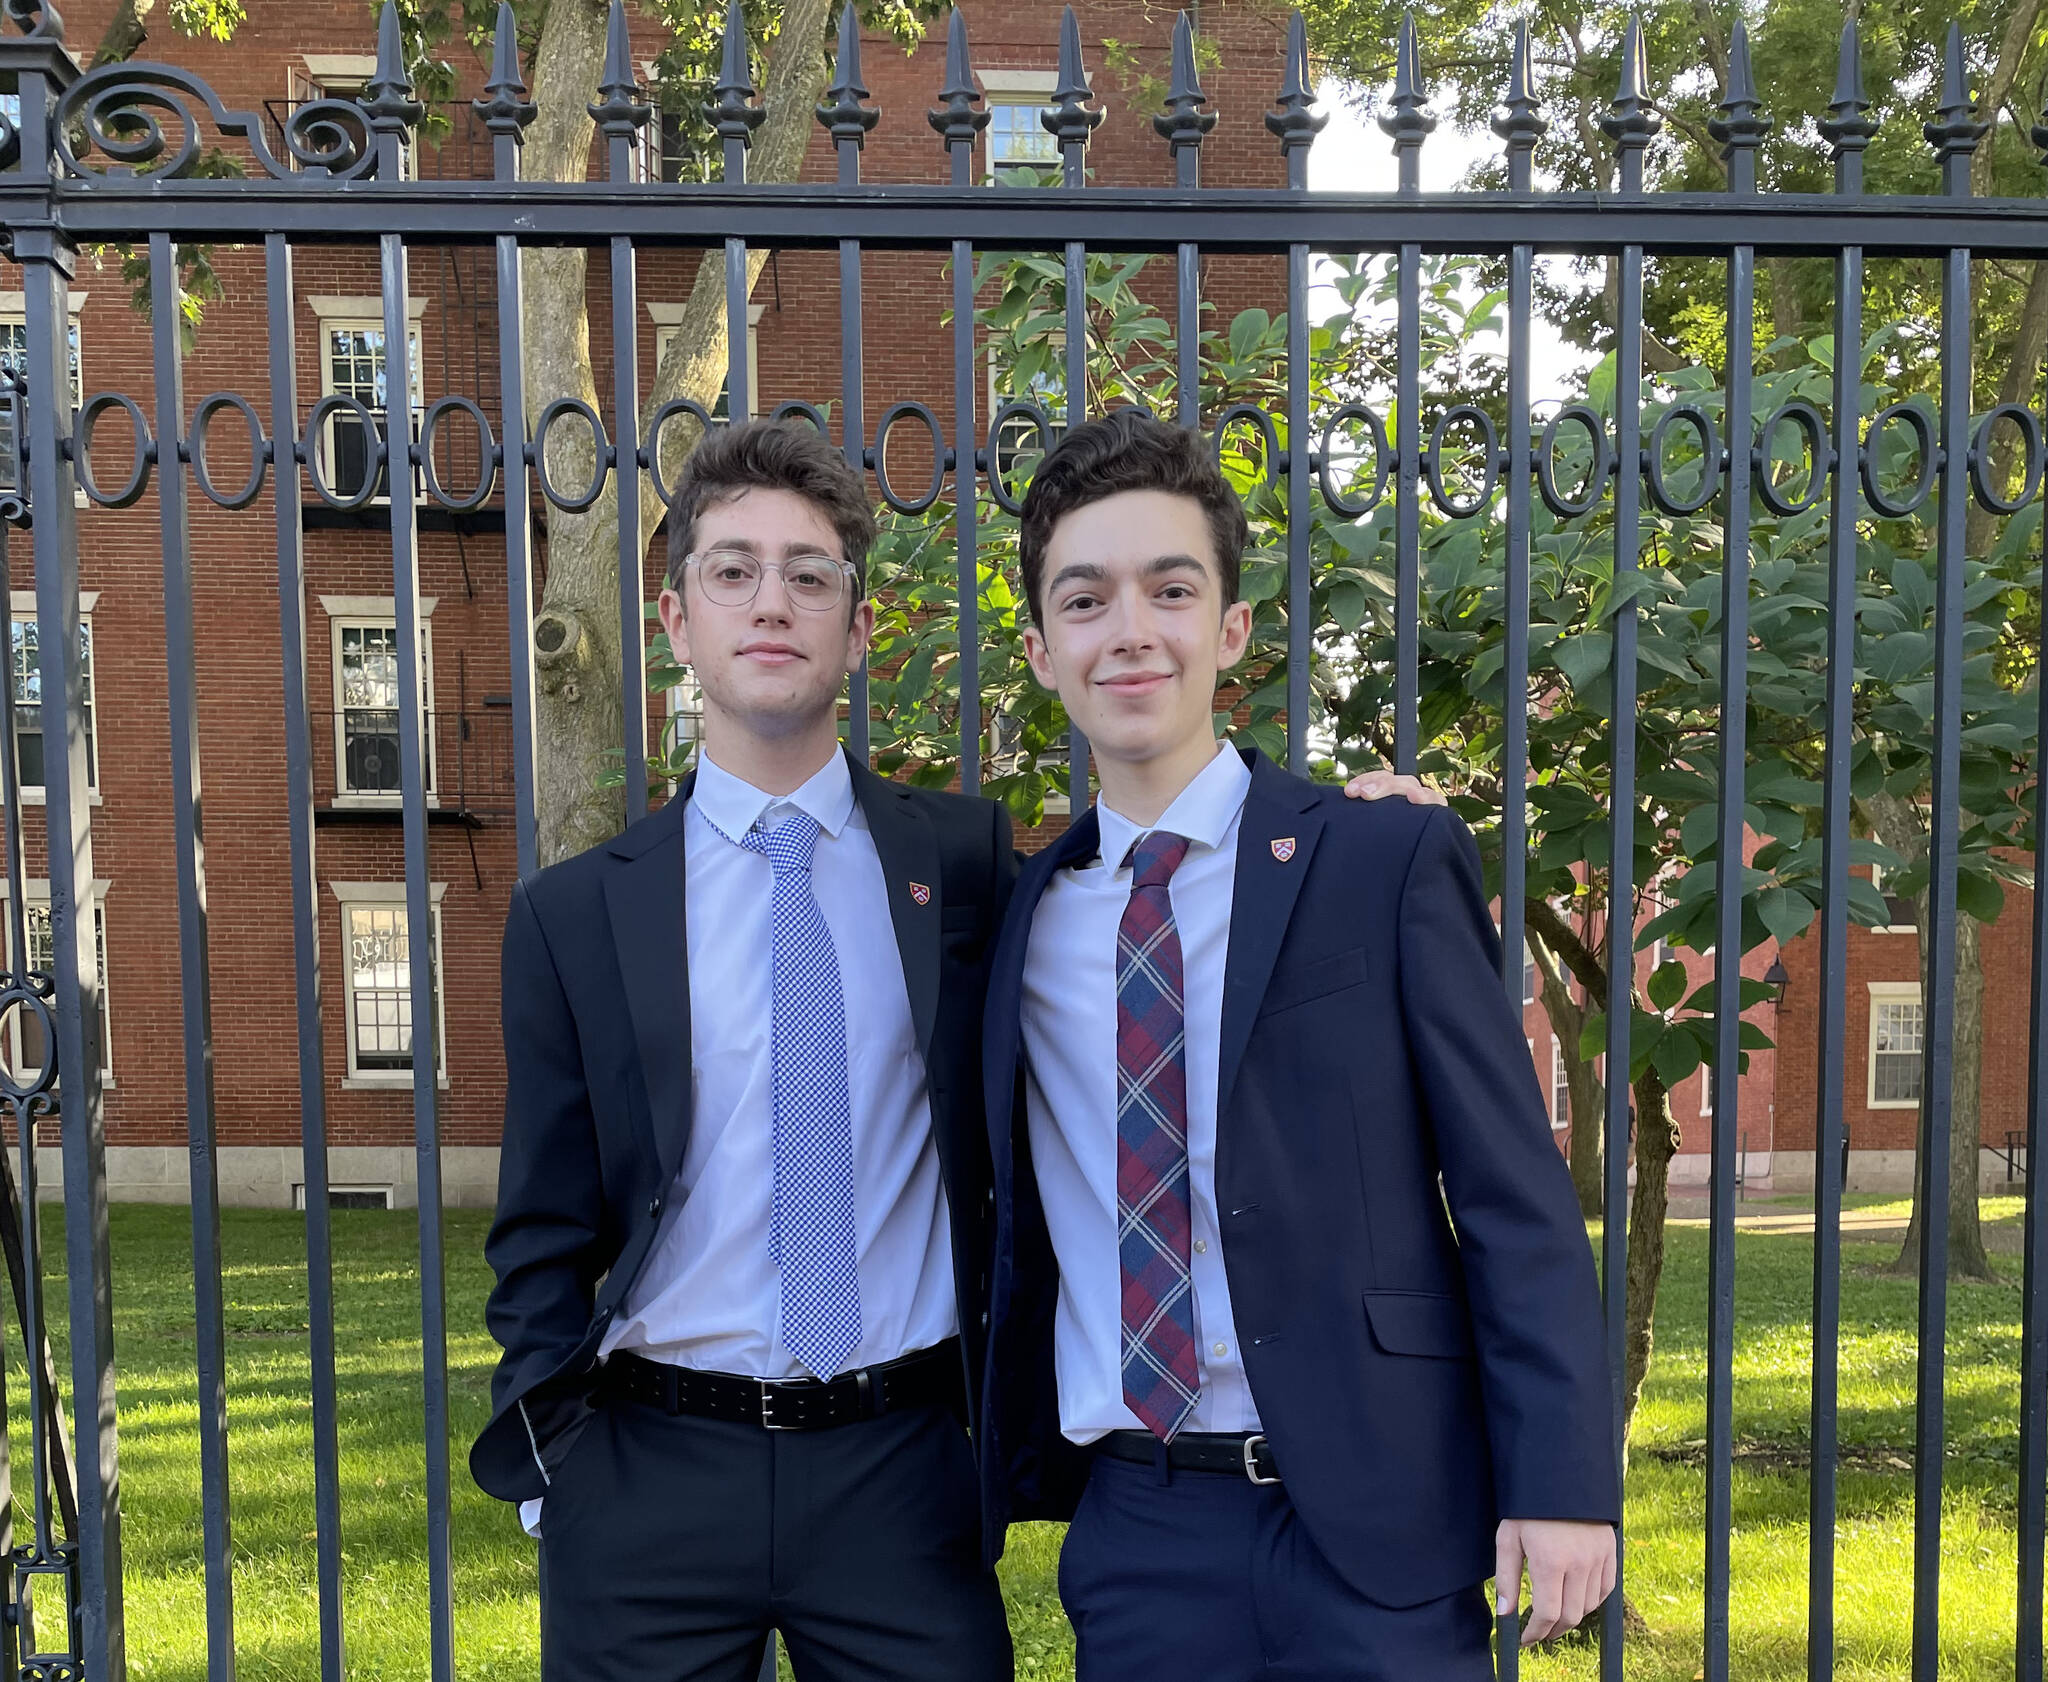 Avi Schiffmann, left, and Marco Burstein at Harvard University. Courtesy photo